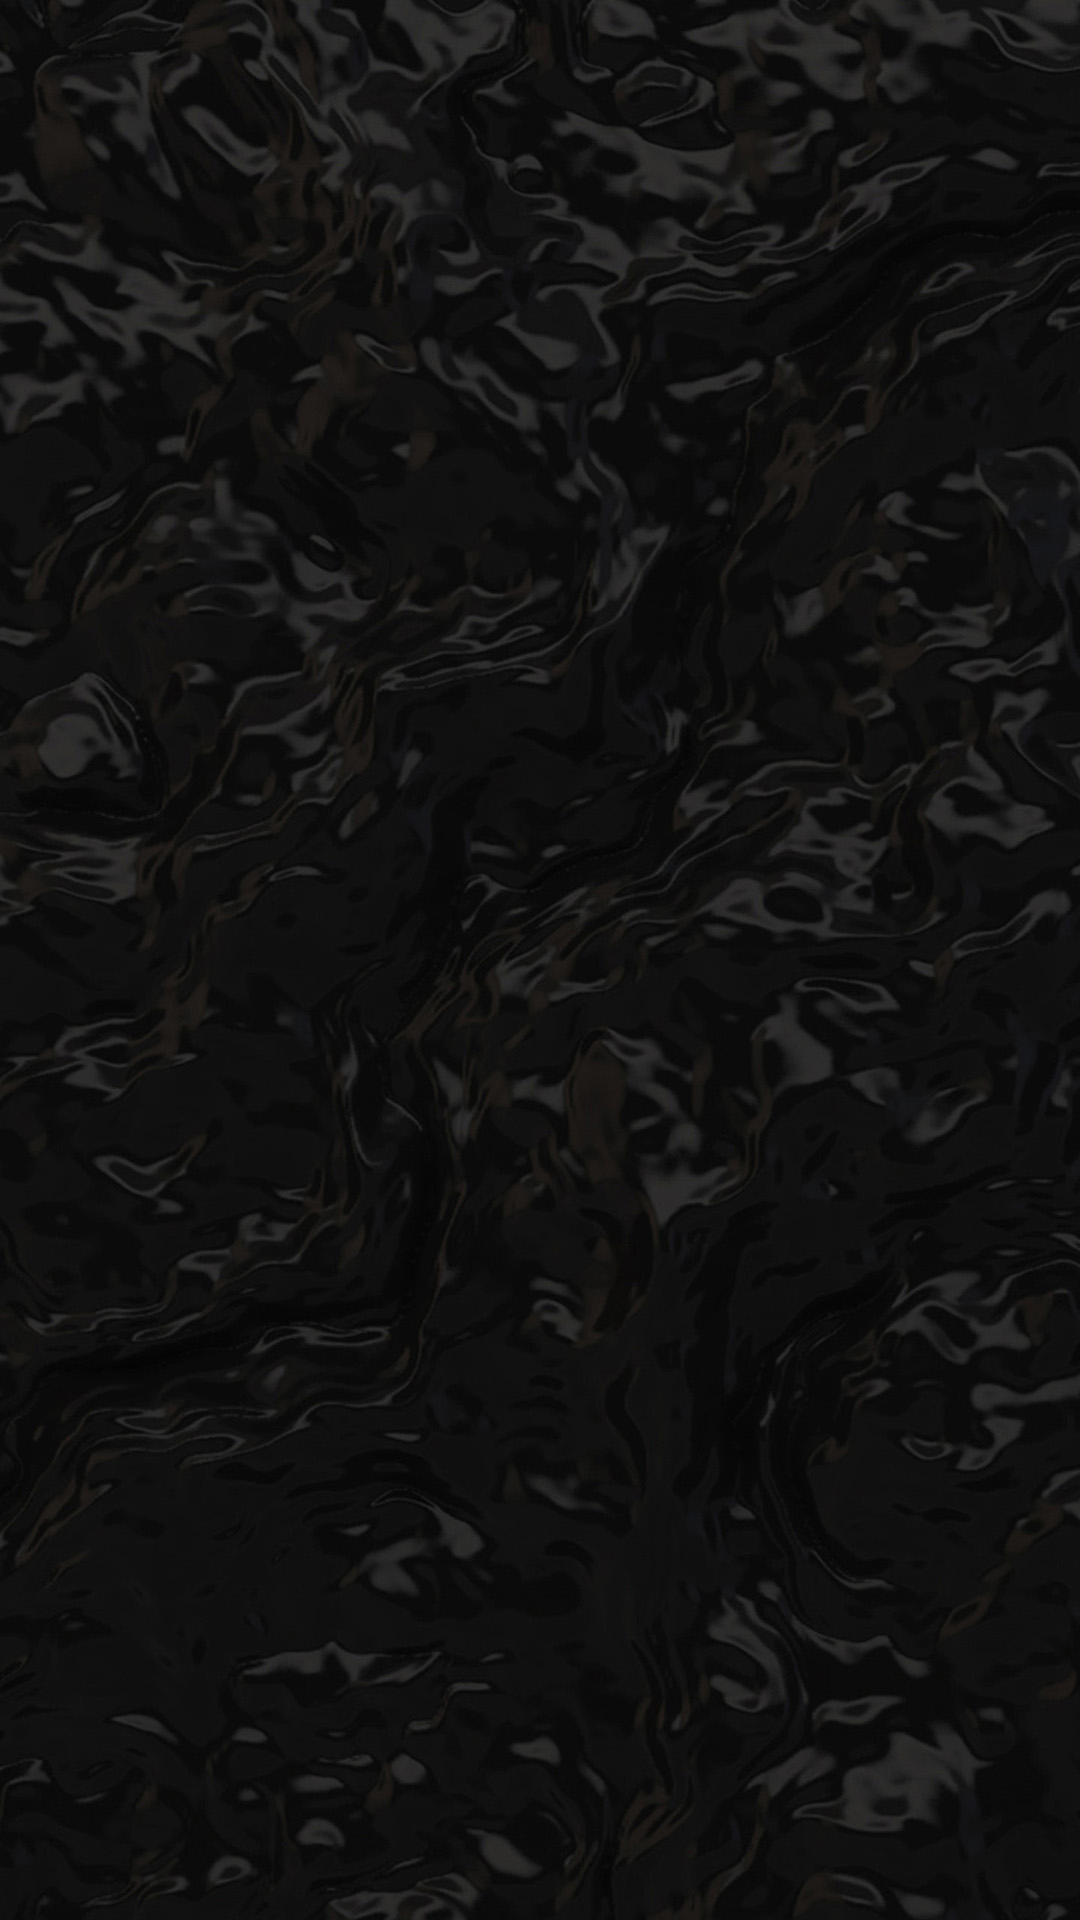 1080x1920 33+] Samsung Galaxy S5 Black Wallpaper